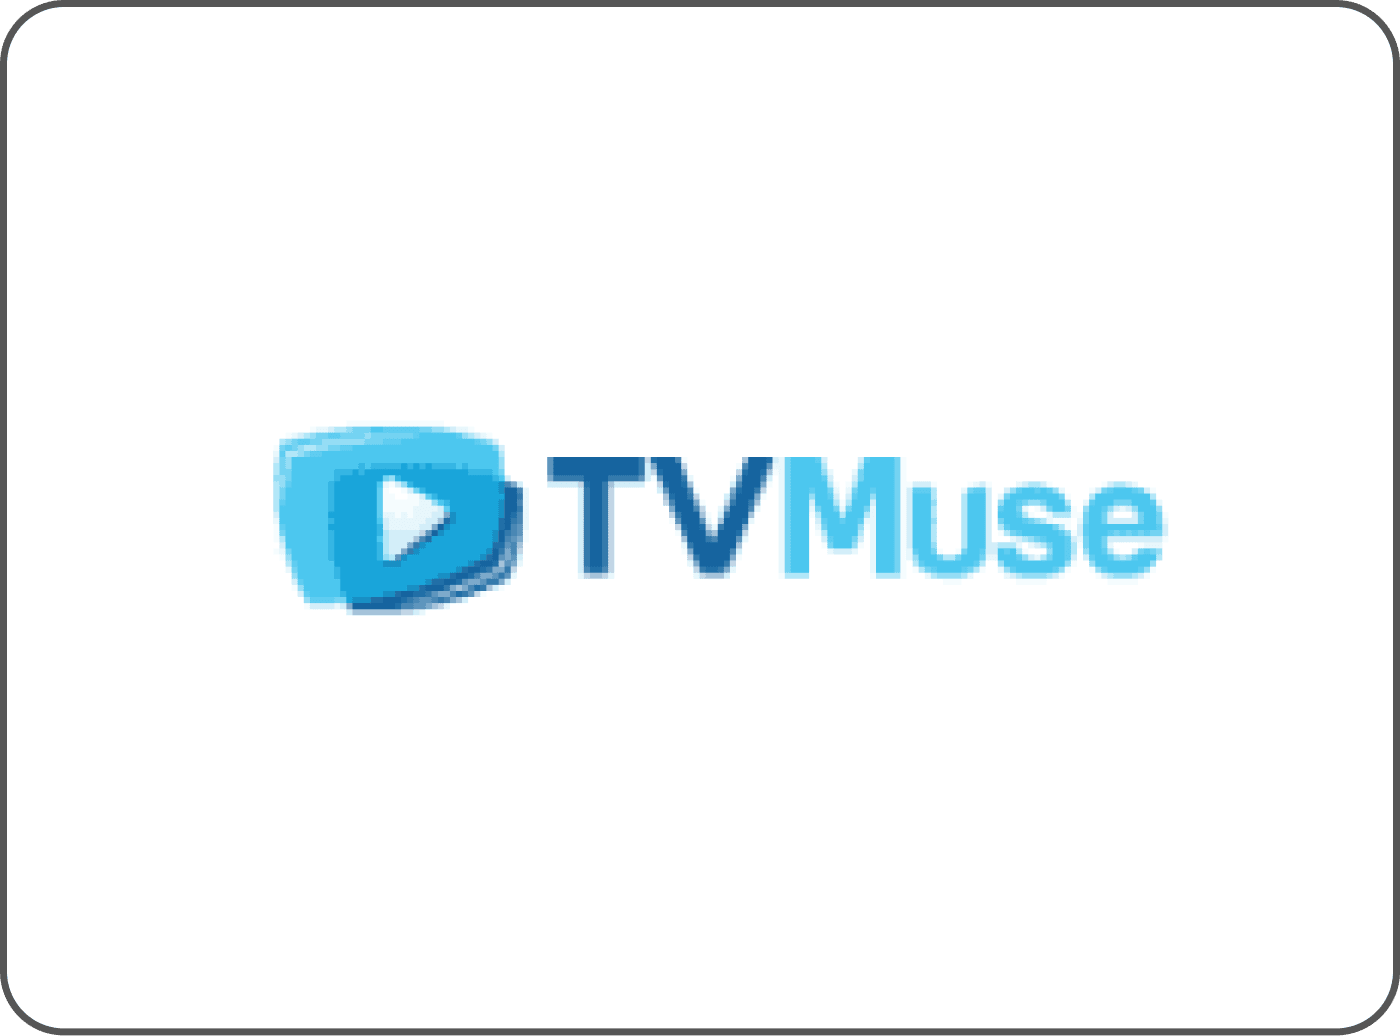 TV Muse